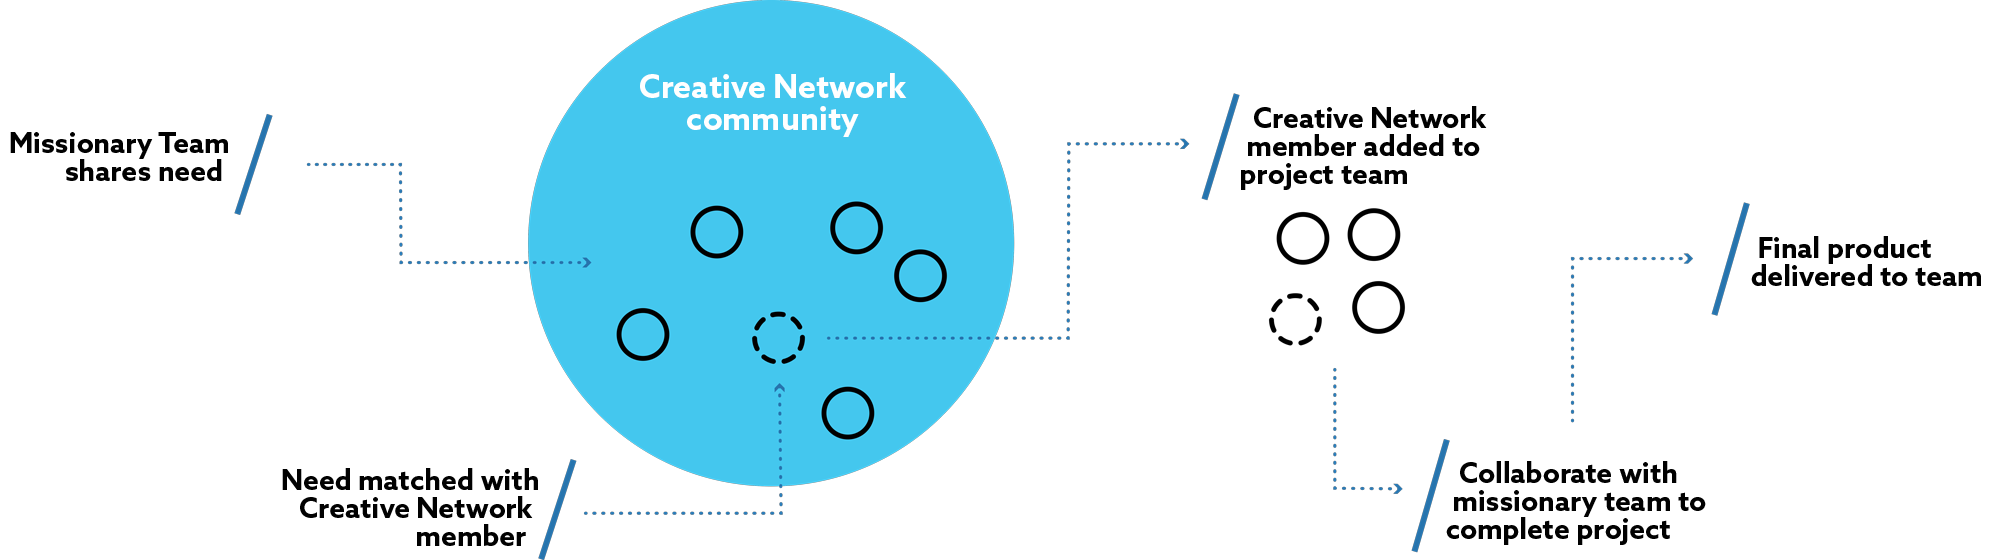 Creative Network workflow infographic